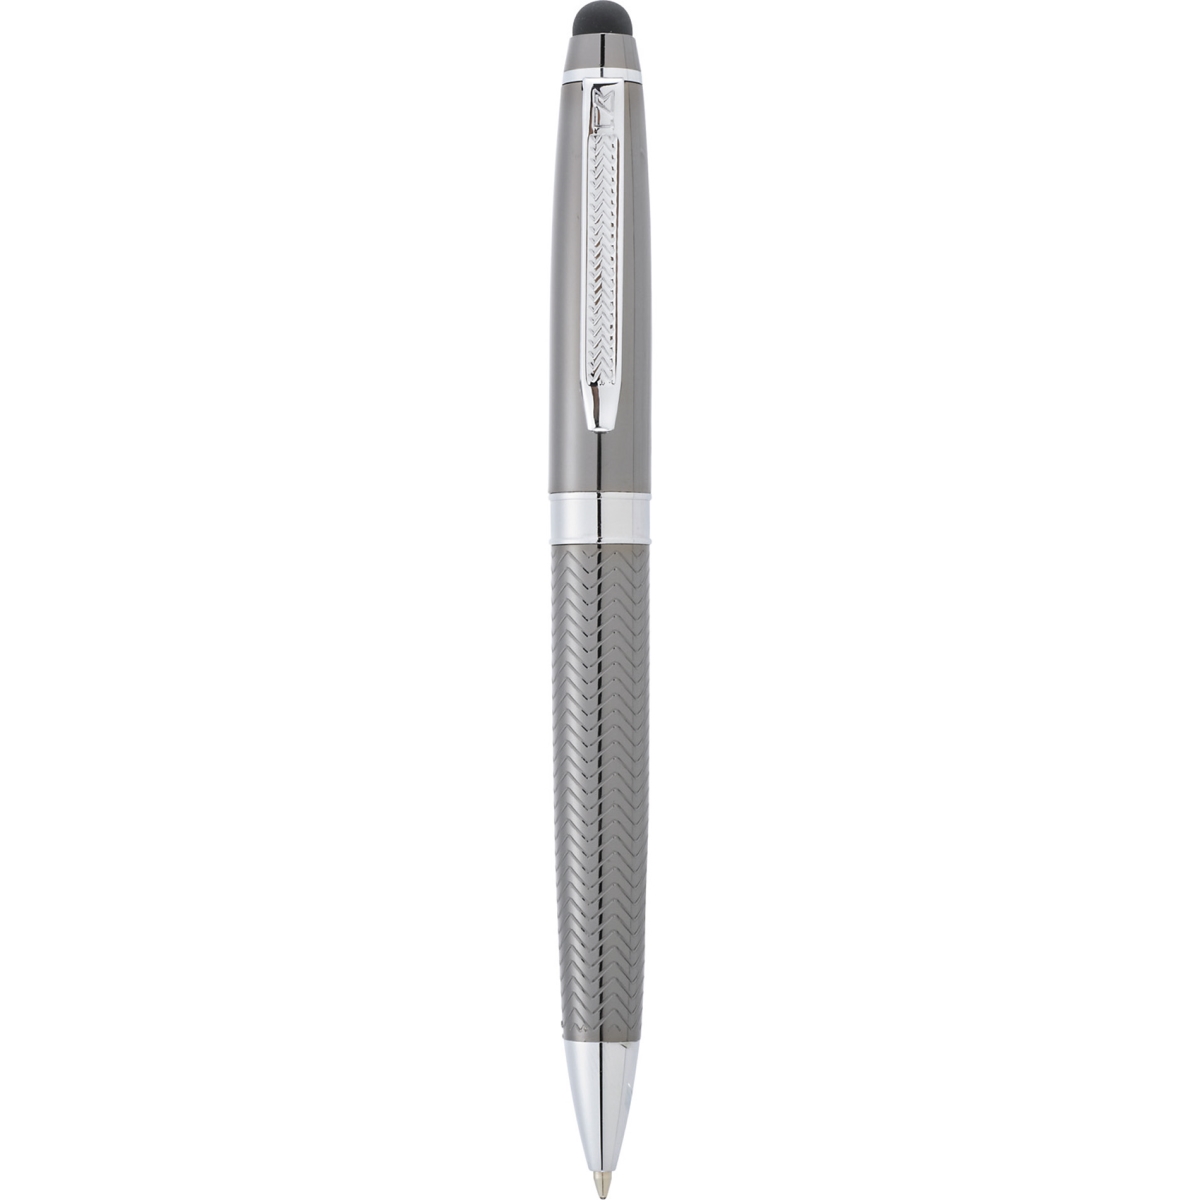 9810-03ga Pacific Dual Ballpoint Stylus Pen, Graphite